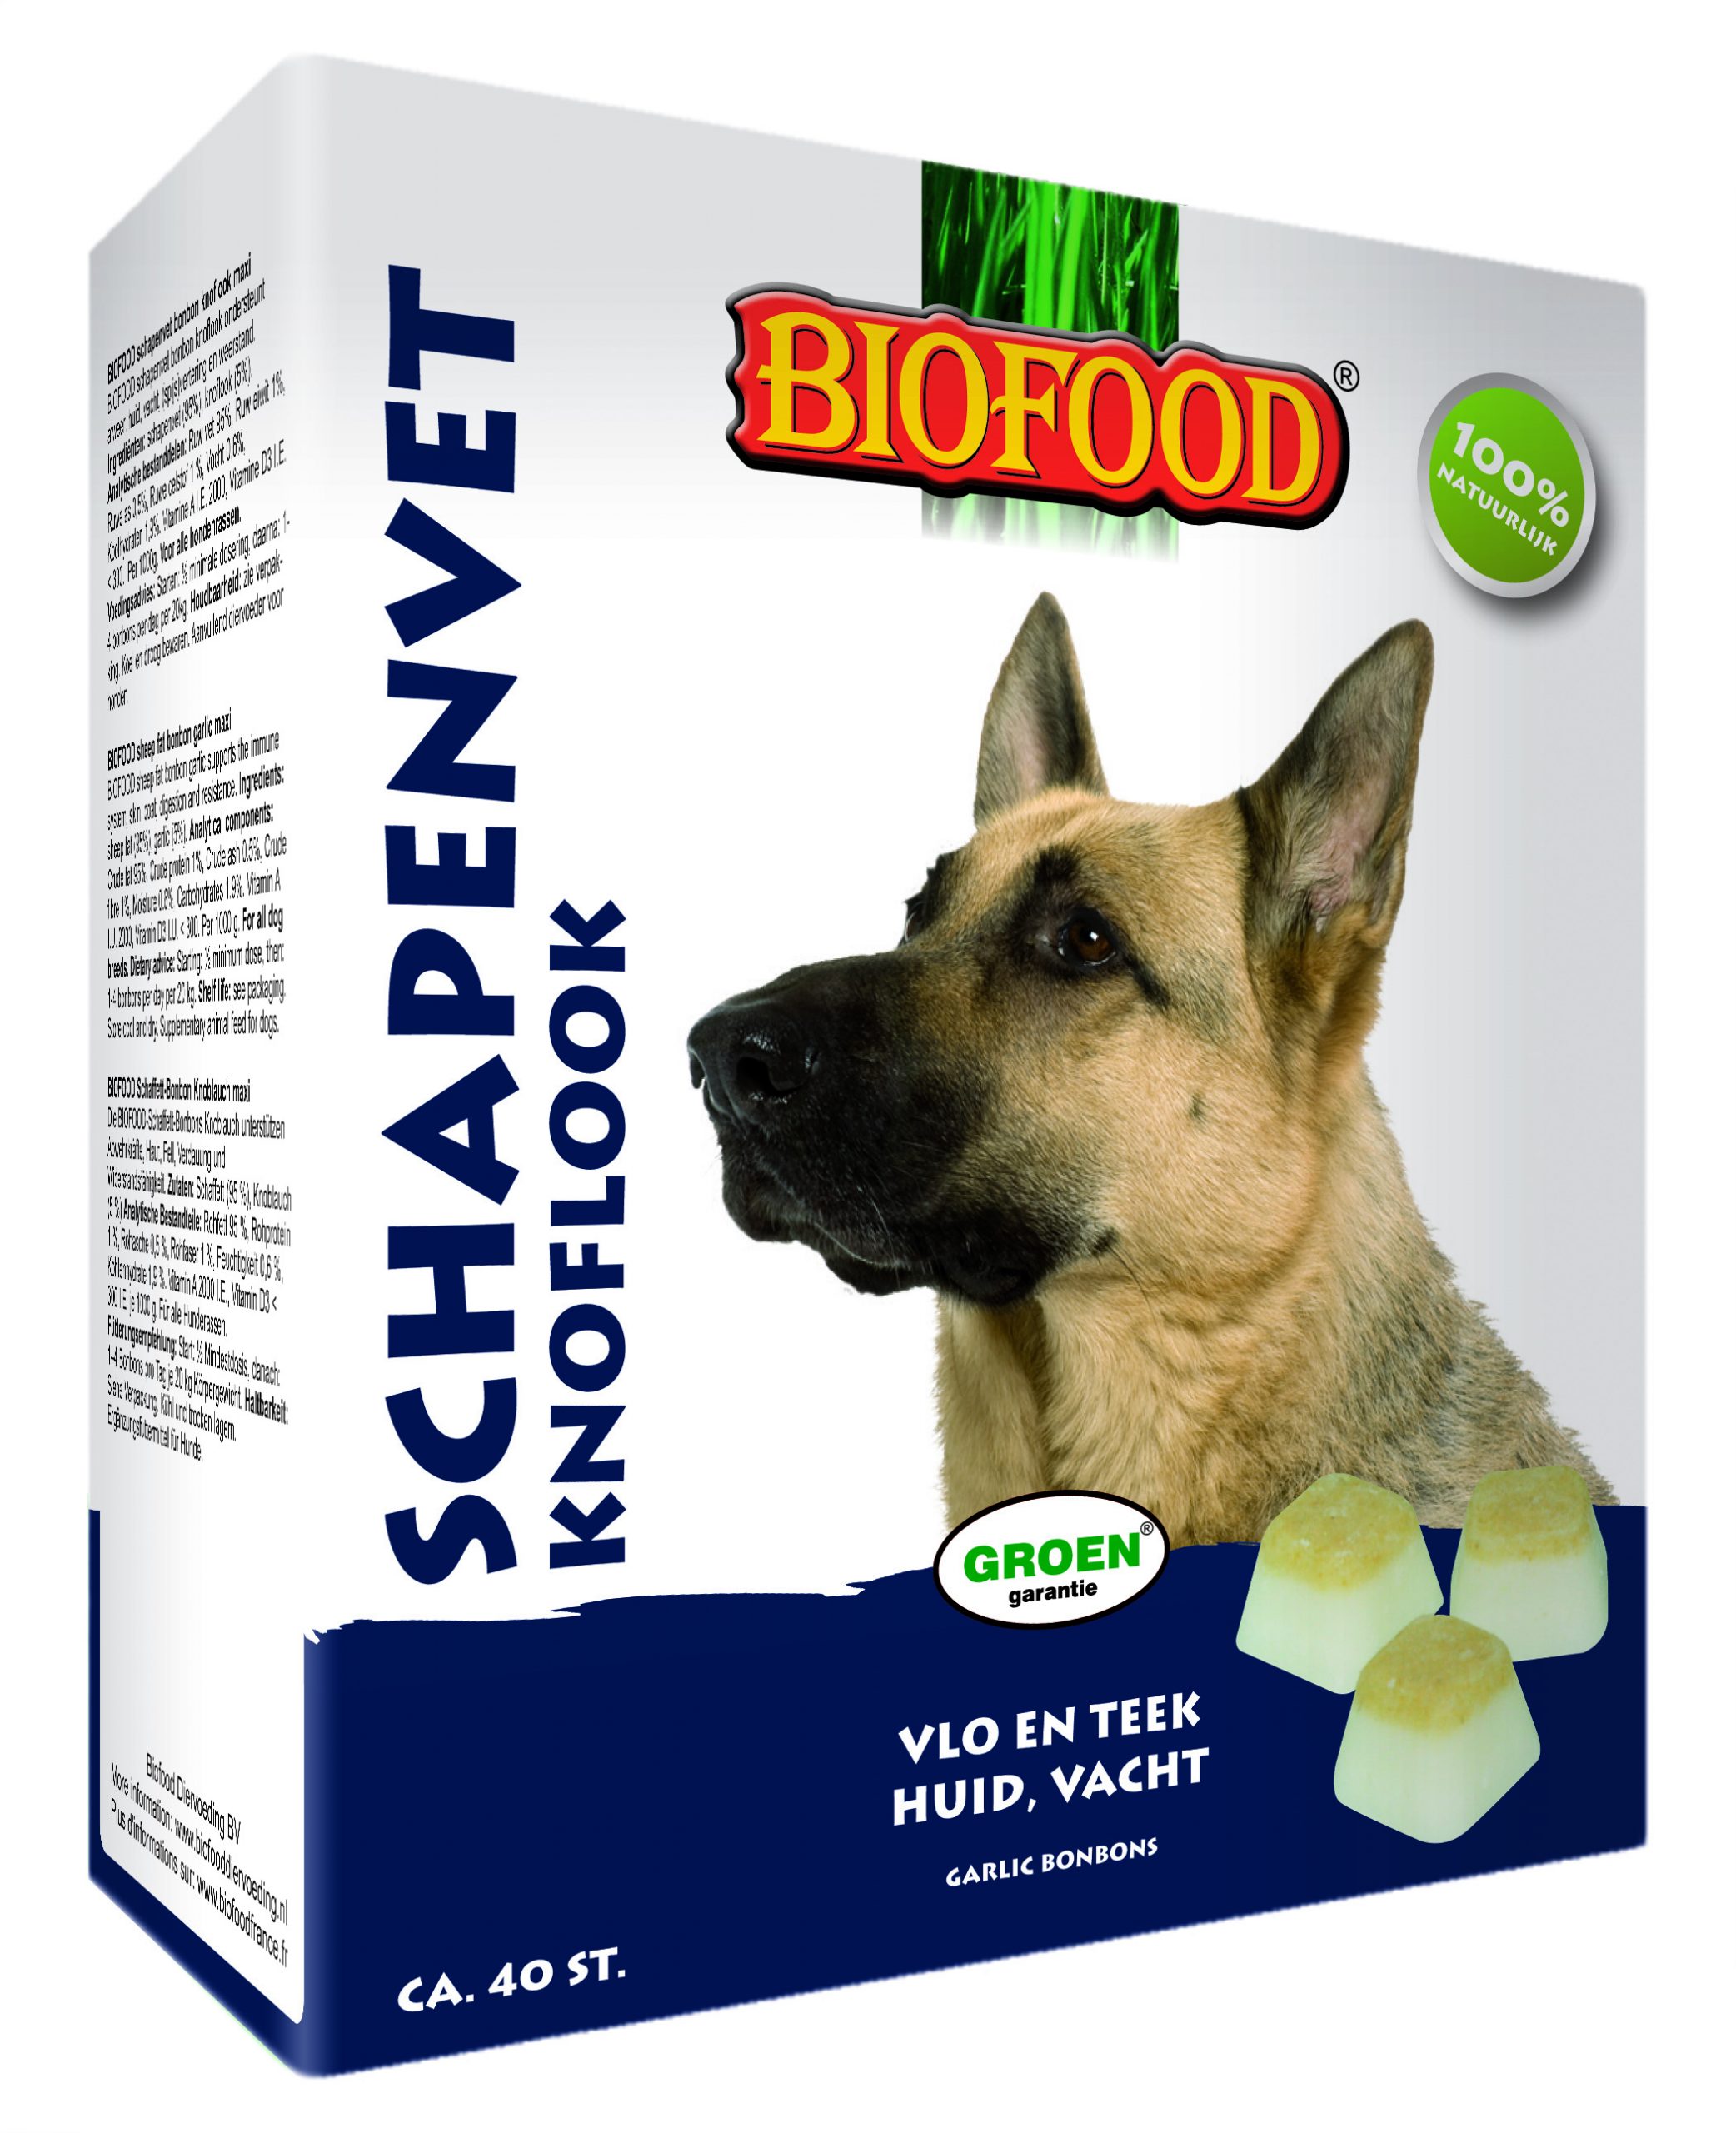 Biofood maxi knoflook 40 stuks - Dierspeciaalmagazijn. Complete dierspeciaalzaak